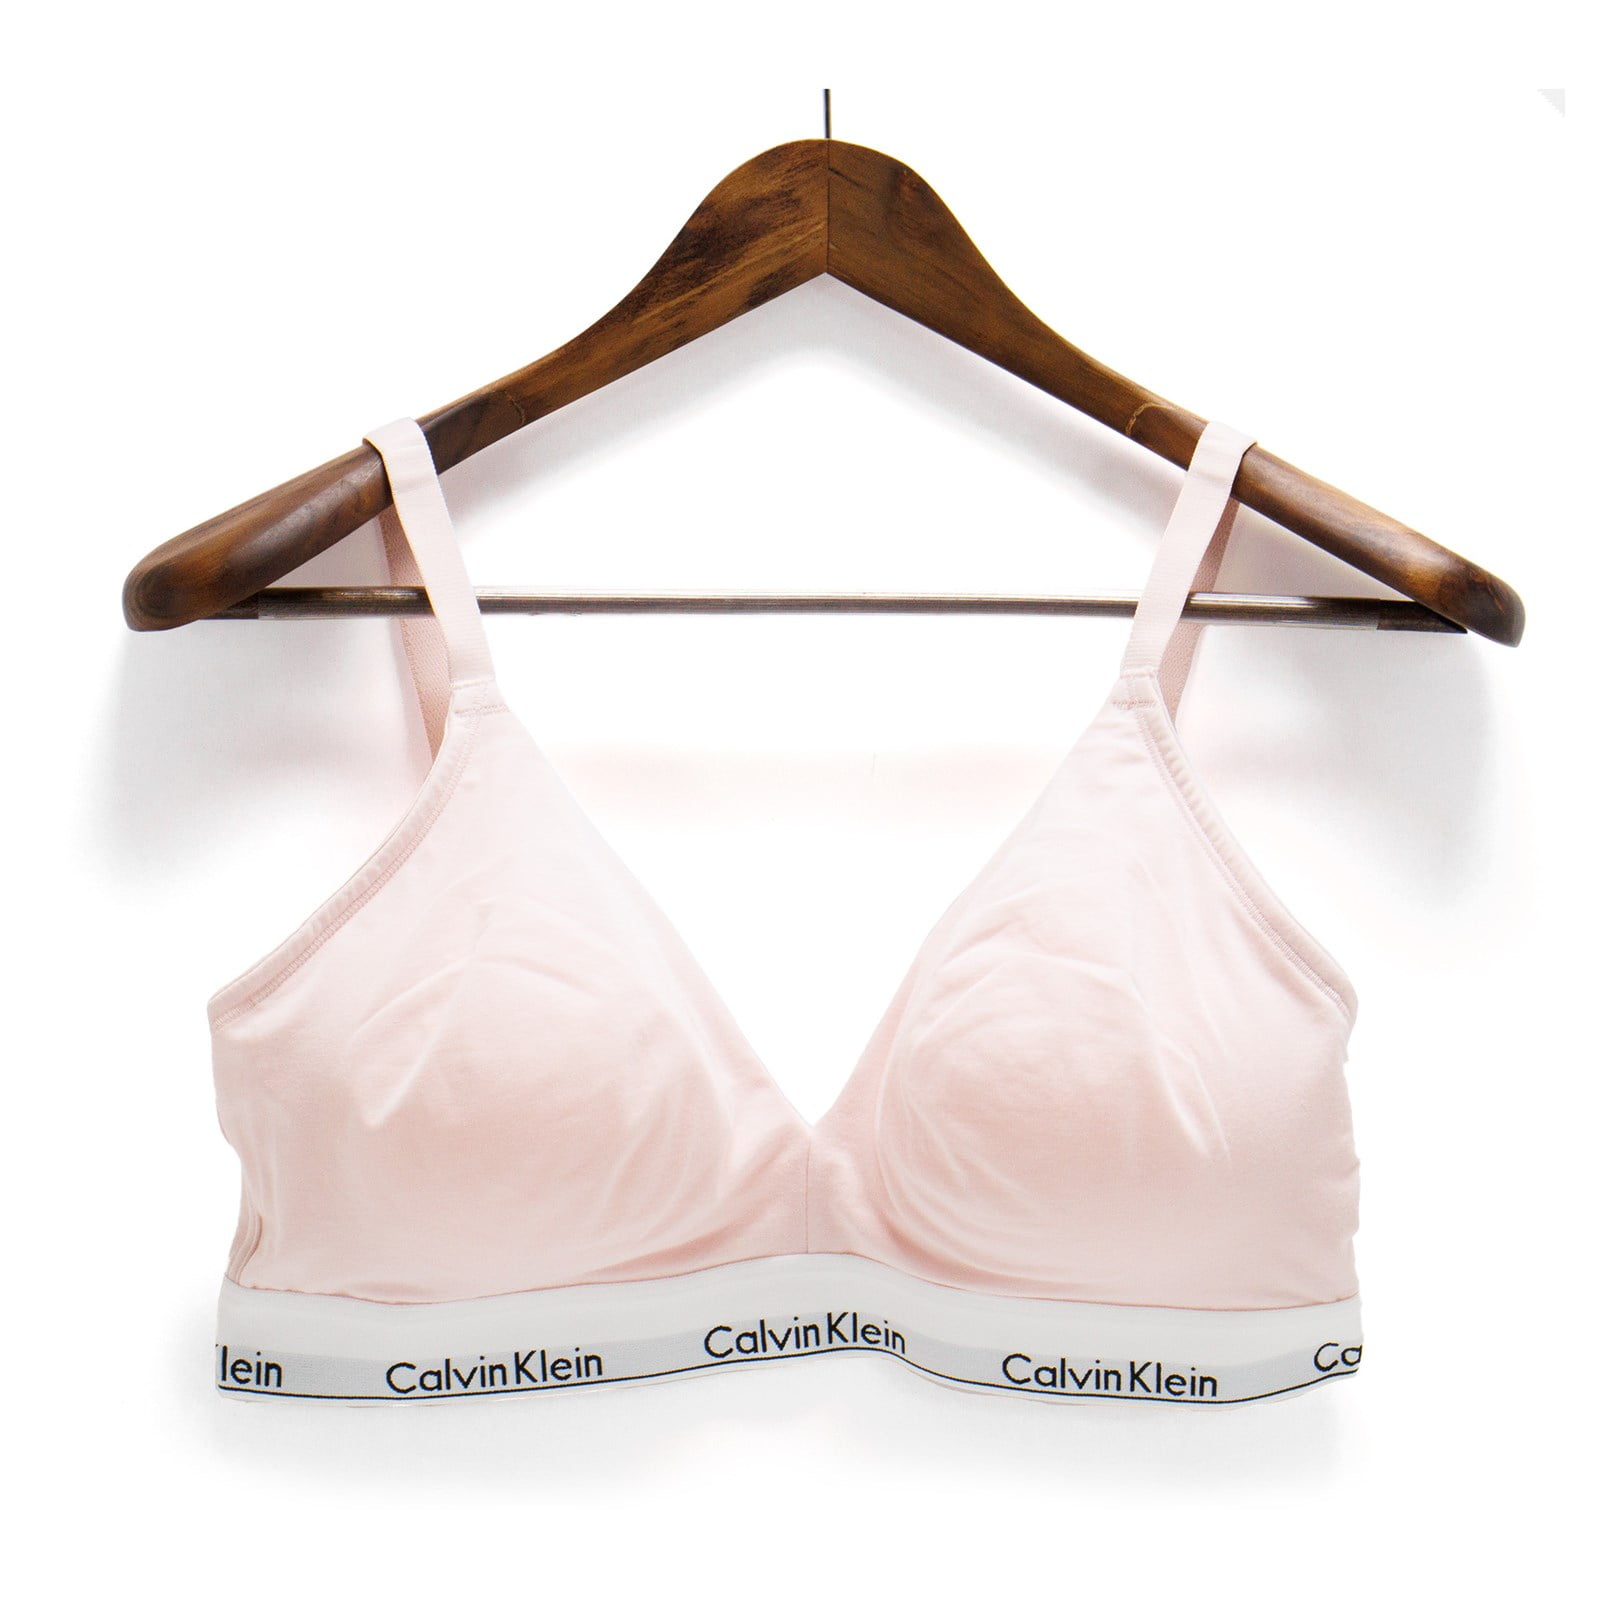 Calvin Klein Womens Modern Cotton Lightly Lined Wireless Bralette